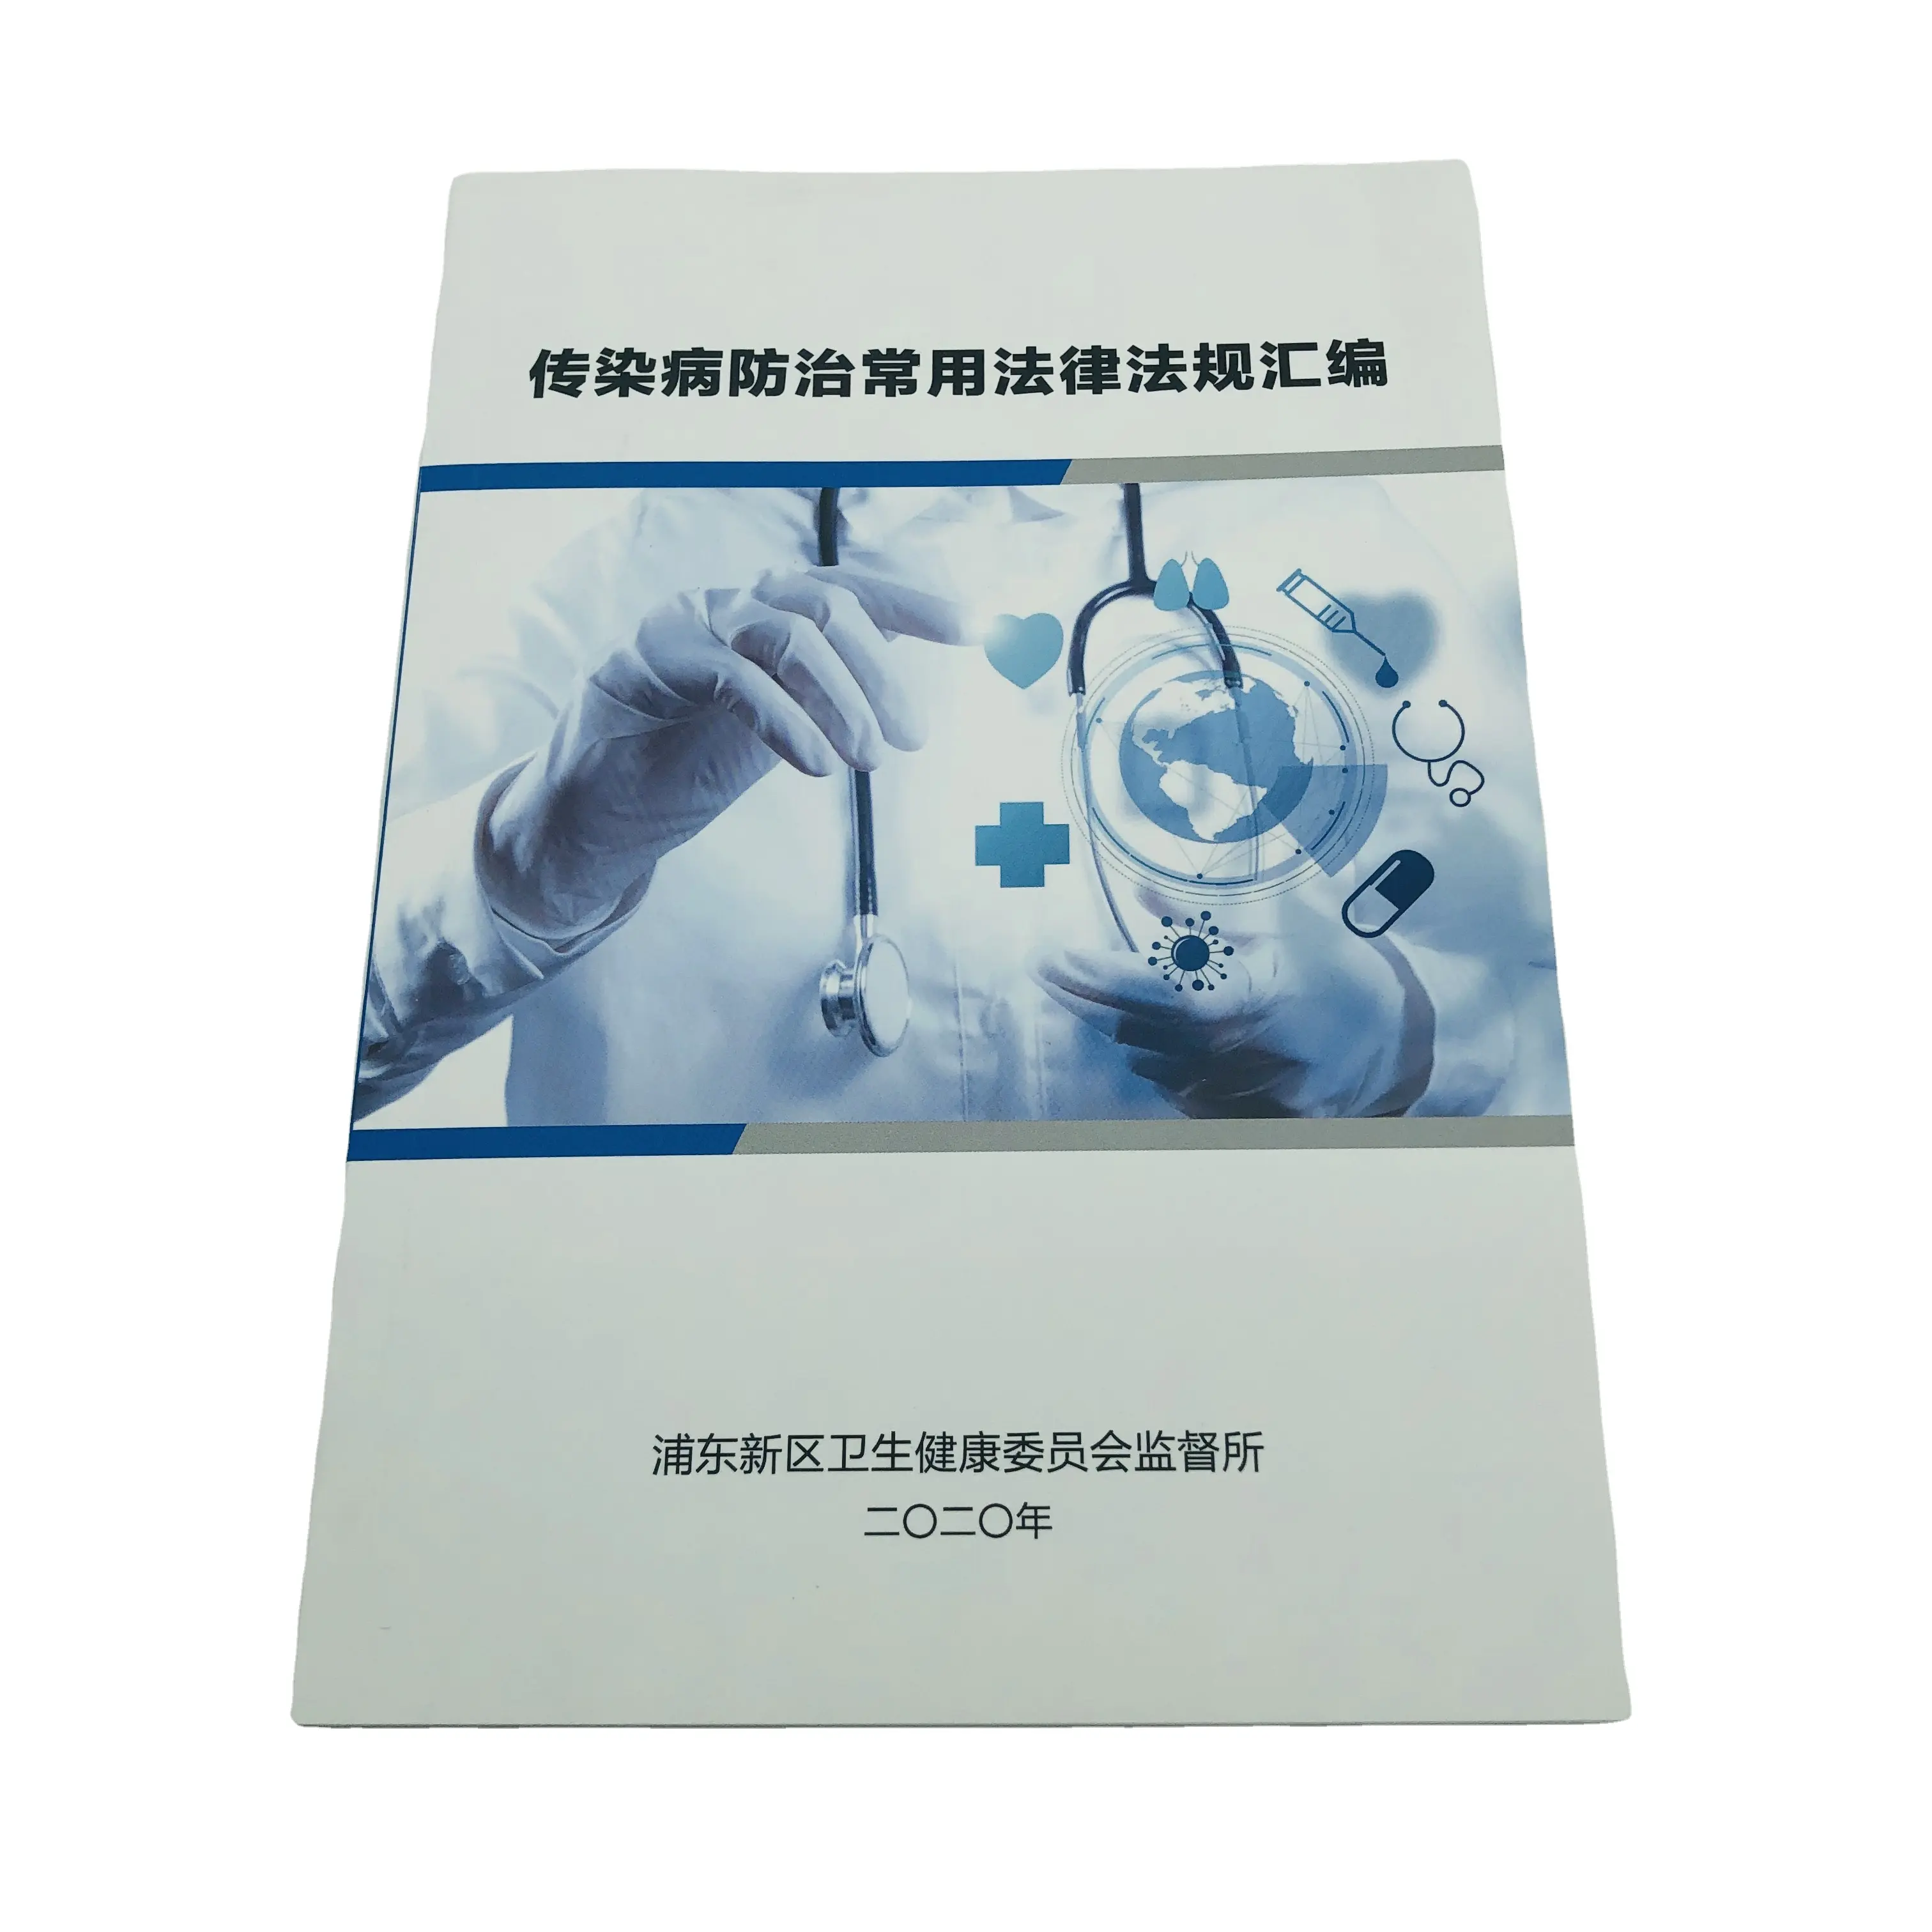 SM-SJ010 סין ספר מדפסת מותאם אישית מלא צבע כריכה רכה ספר הדפסה סיטונאי הדפסת עסקים